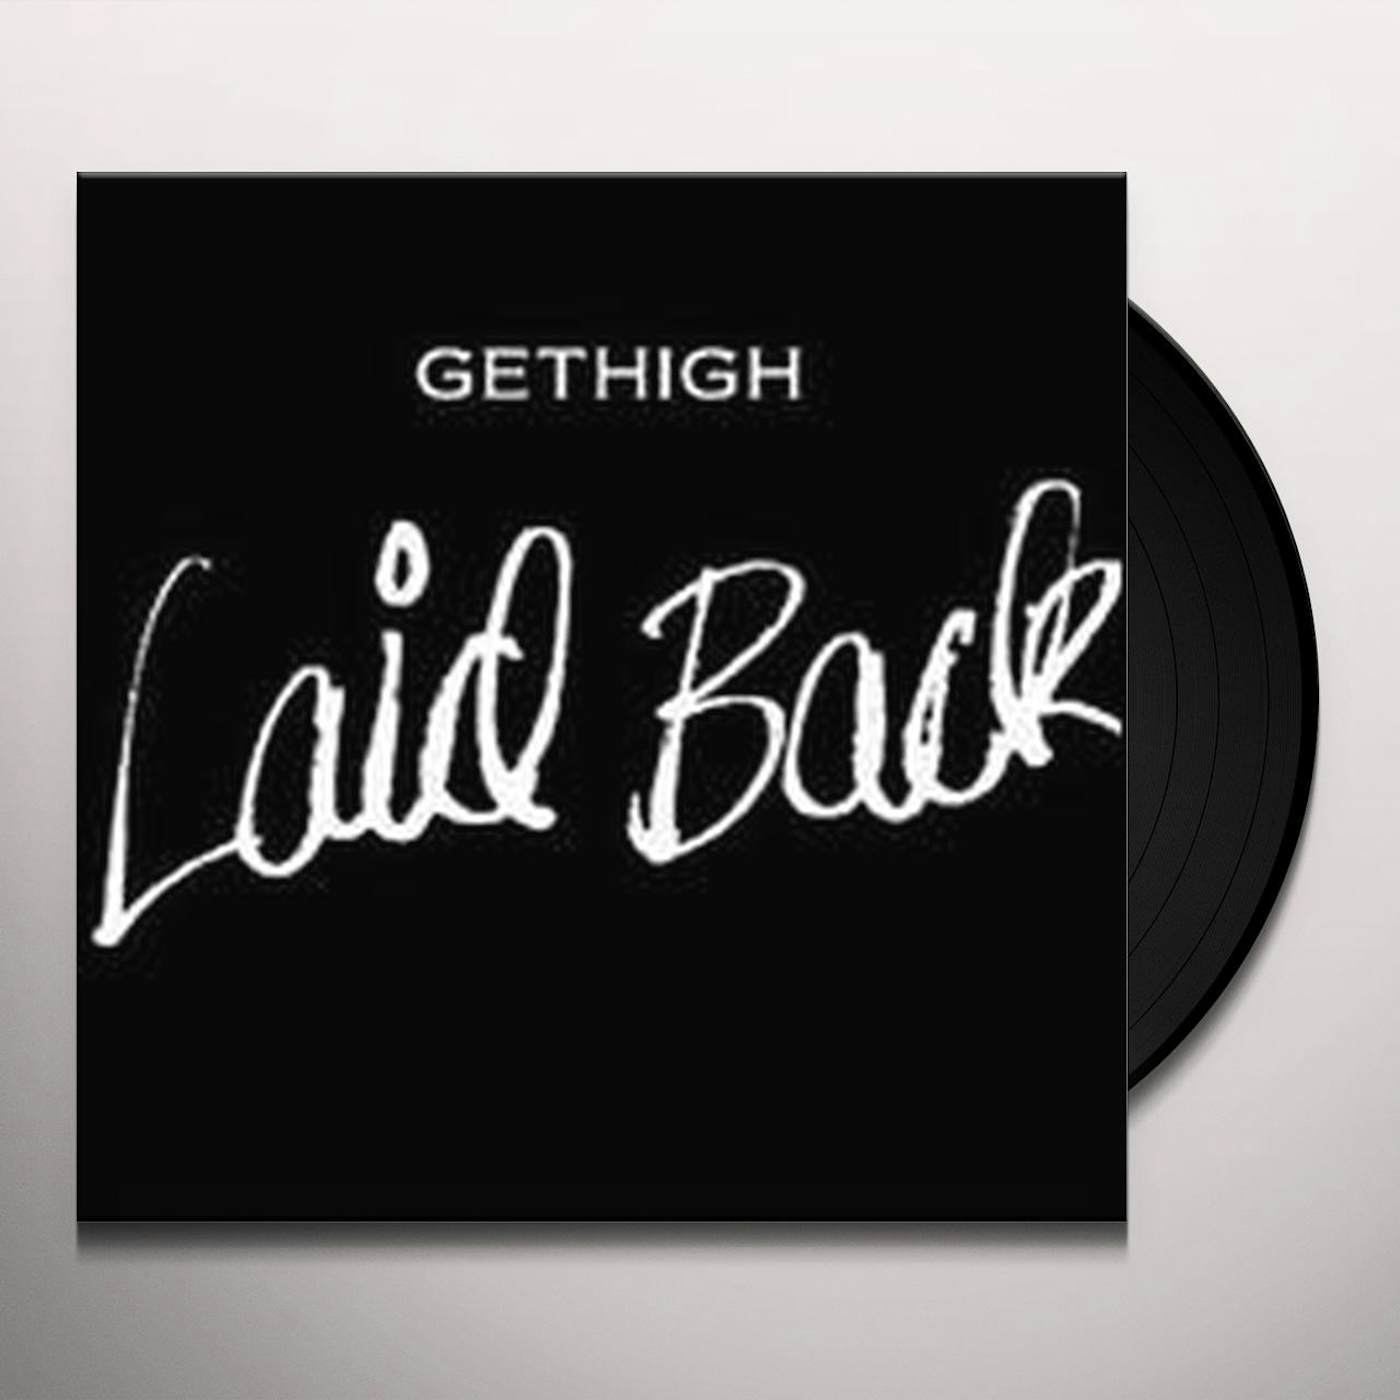 Laid Back GET HIGH Vinyl Record